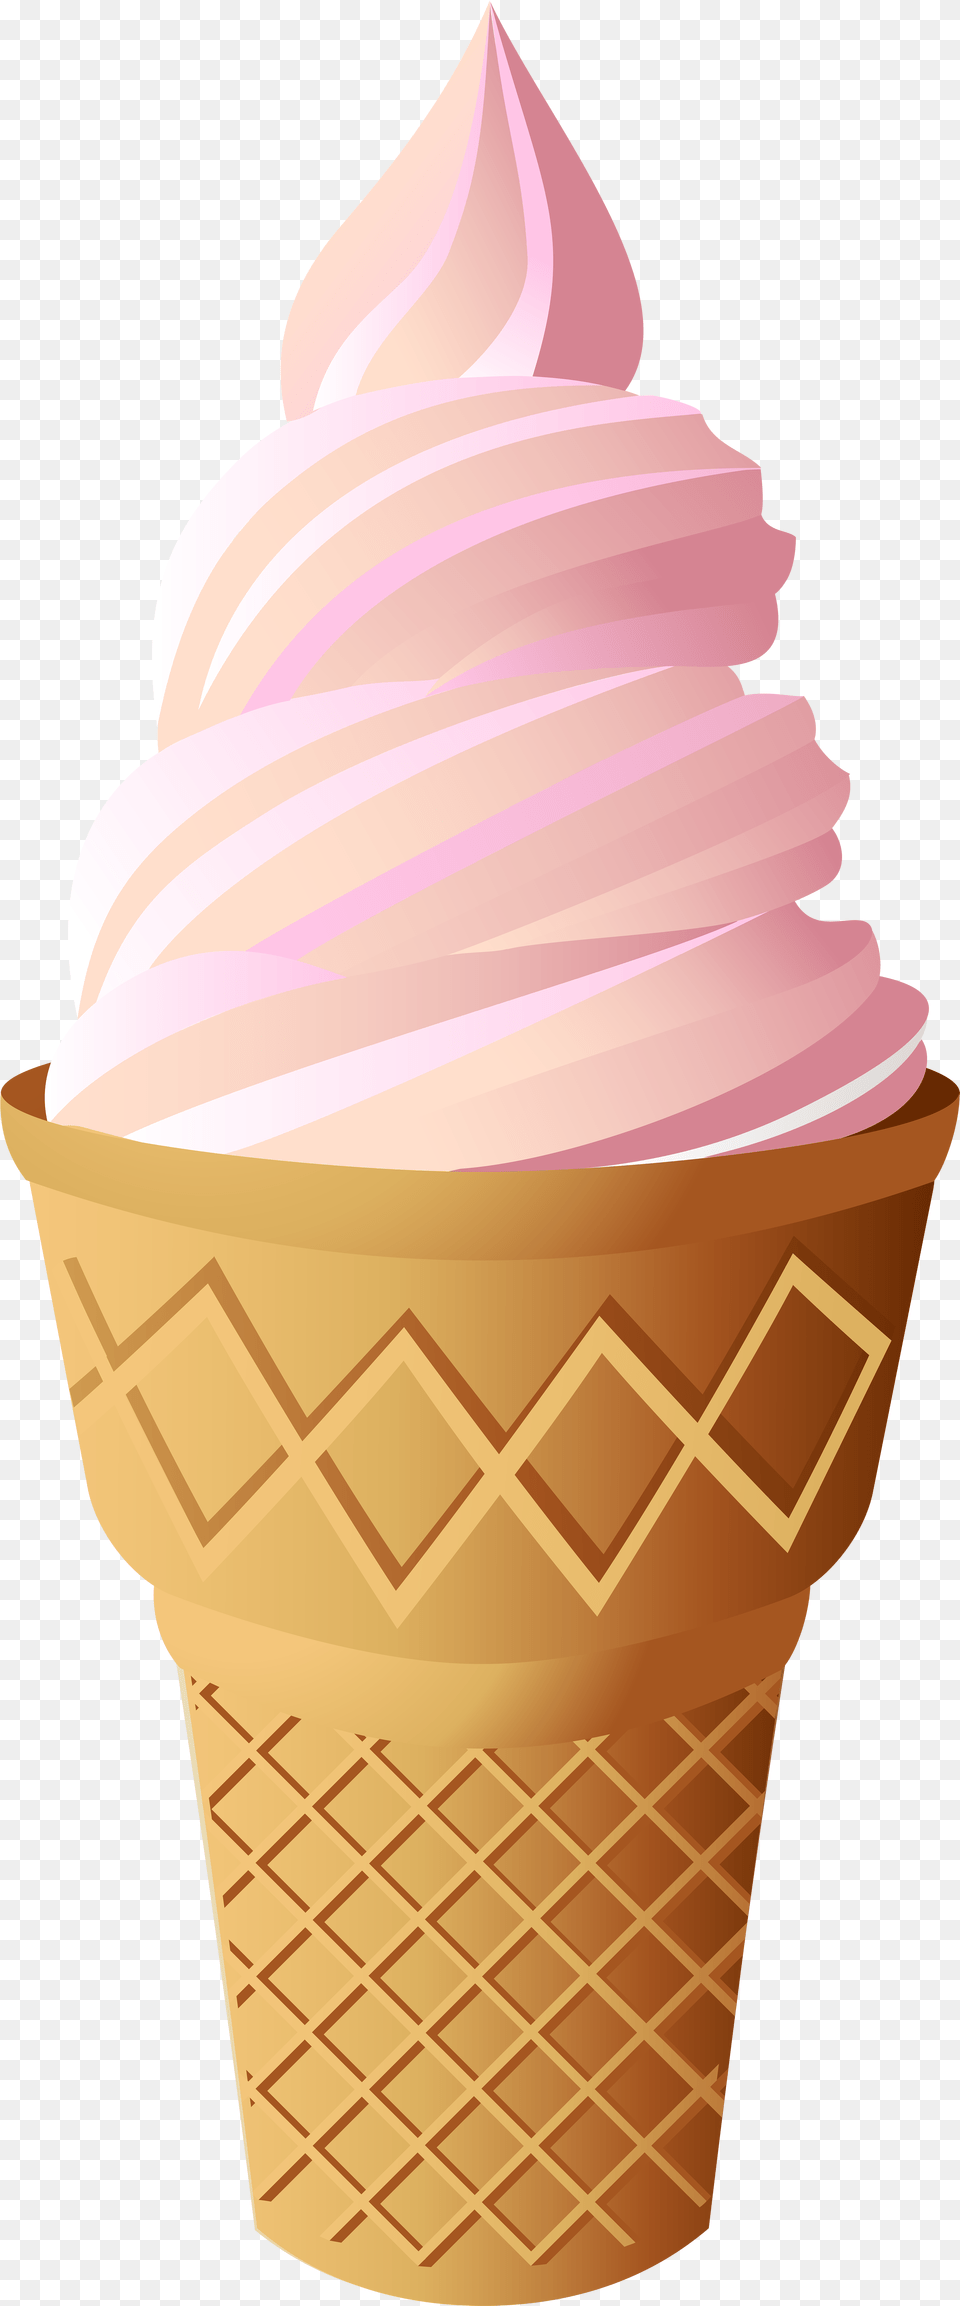 Pink Ice Cream Cone Clip Art Pink Ice Cream, Dessert, Food, Ice Cream, Soft Serve Ice Cream Free Transparent Png